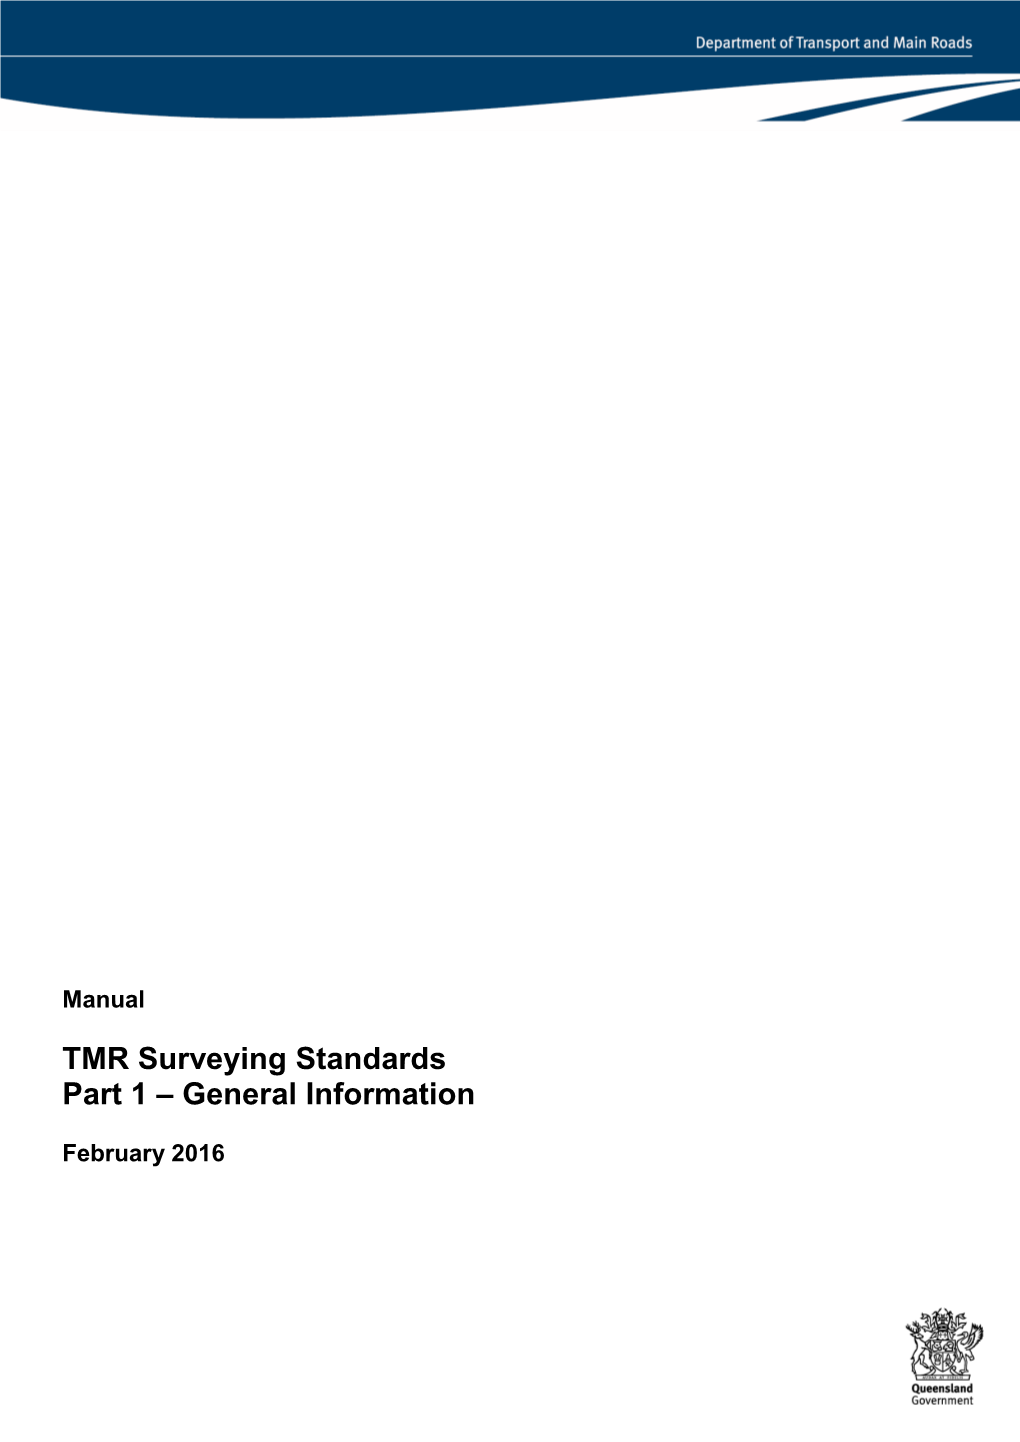 TMR Surveying Standards Part 1 – General Information